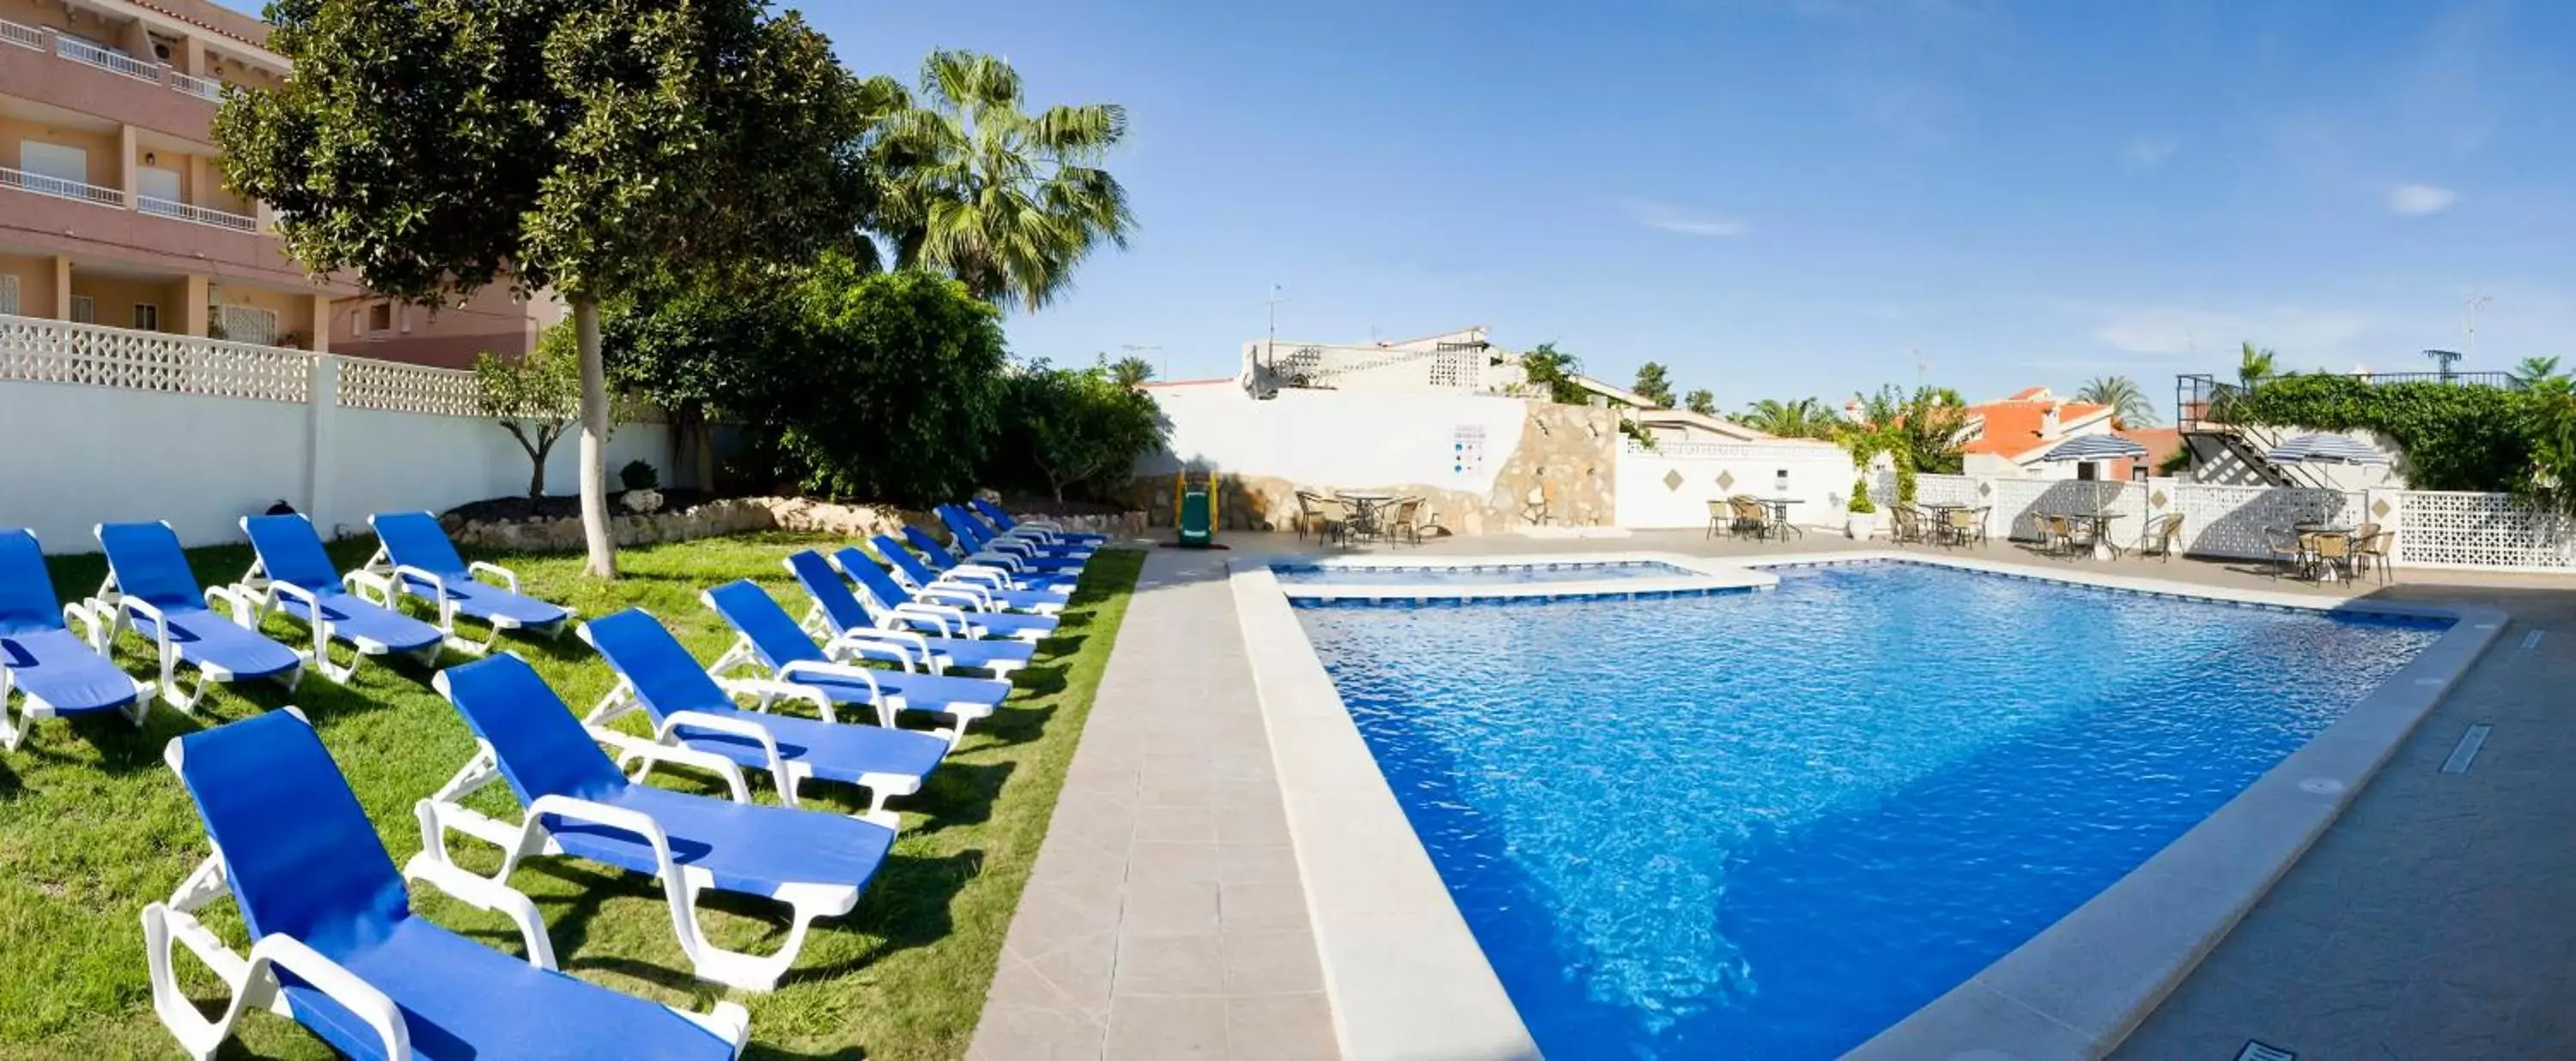 Swimming pool, Banquet Facilities in Ona Aldea del Mar